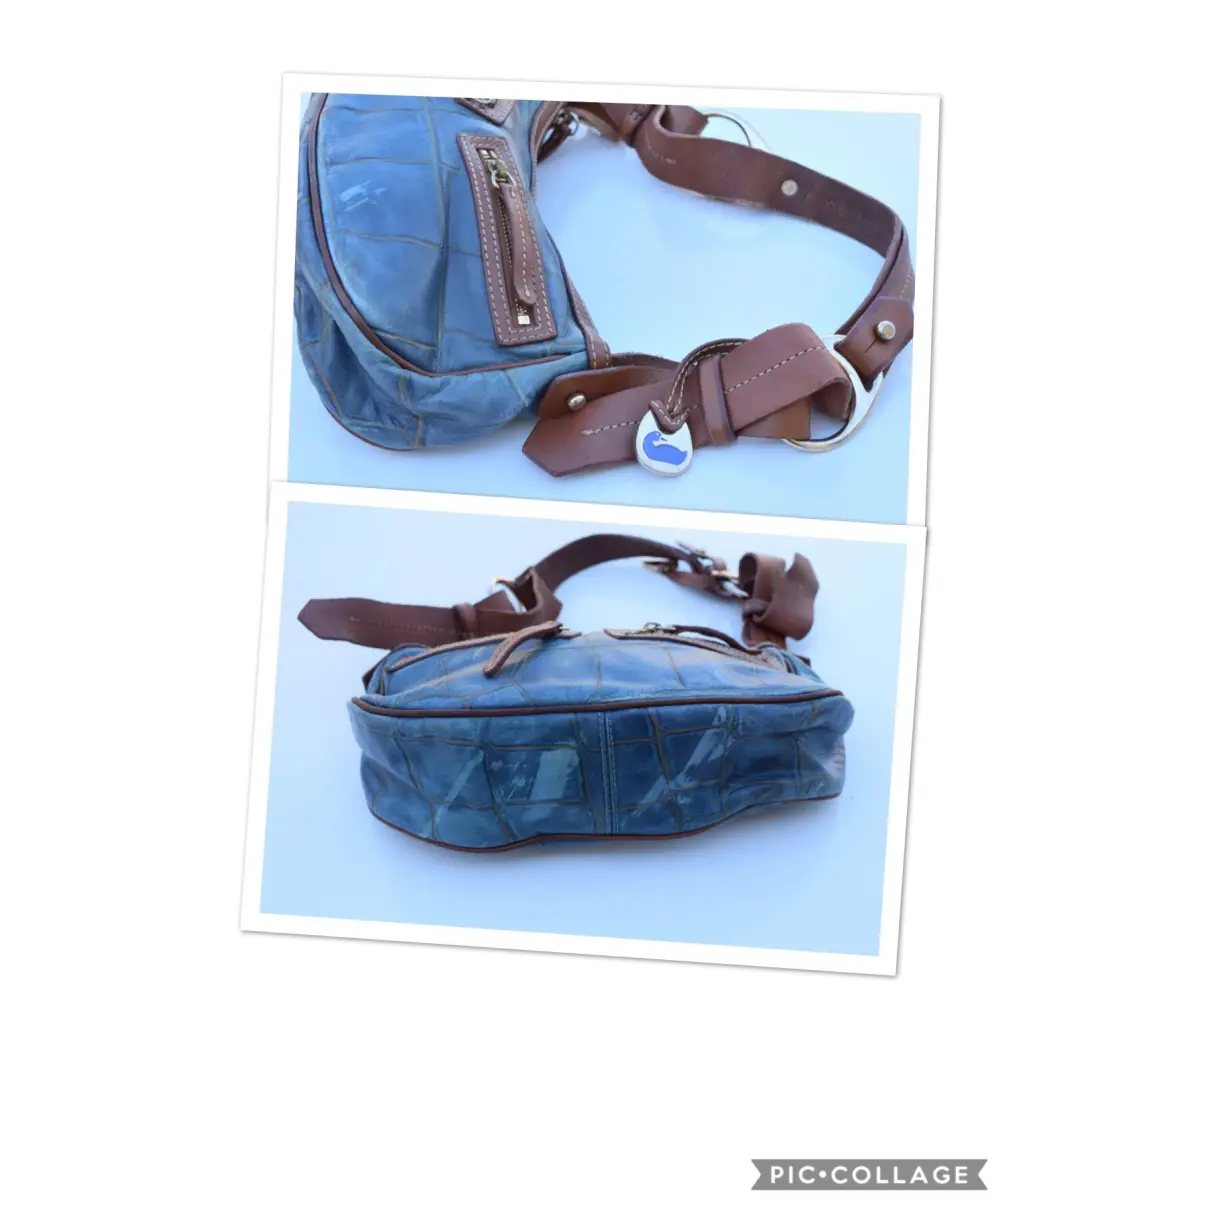 Leather handbag Dooney and Bourke